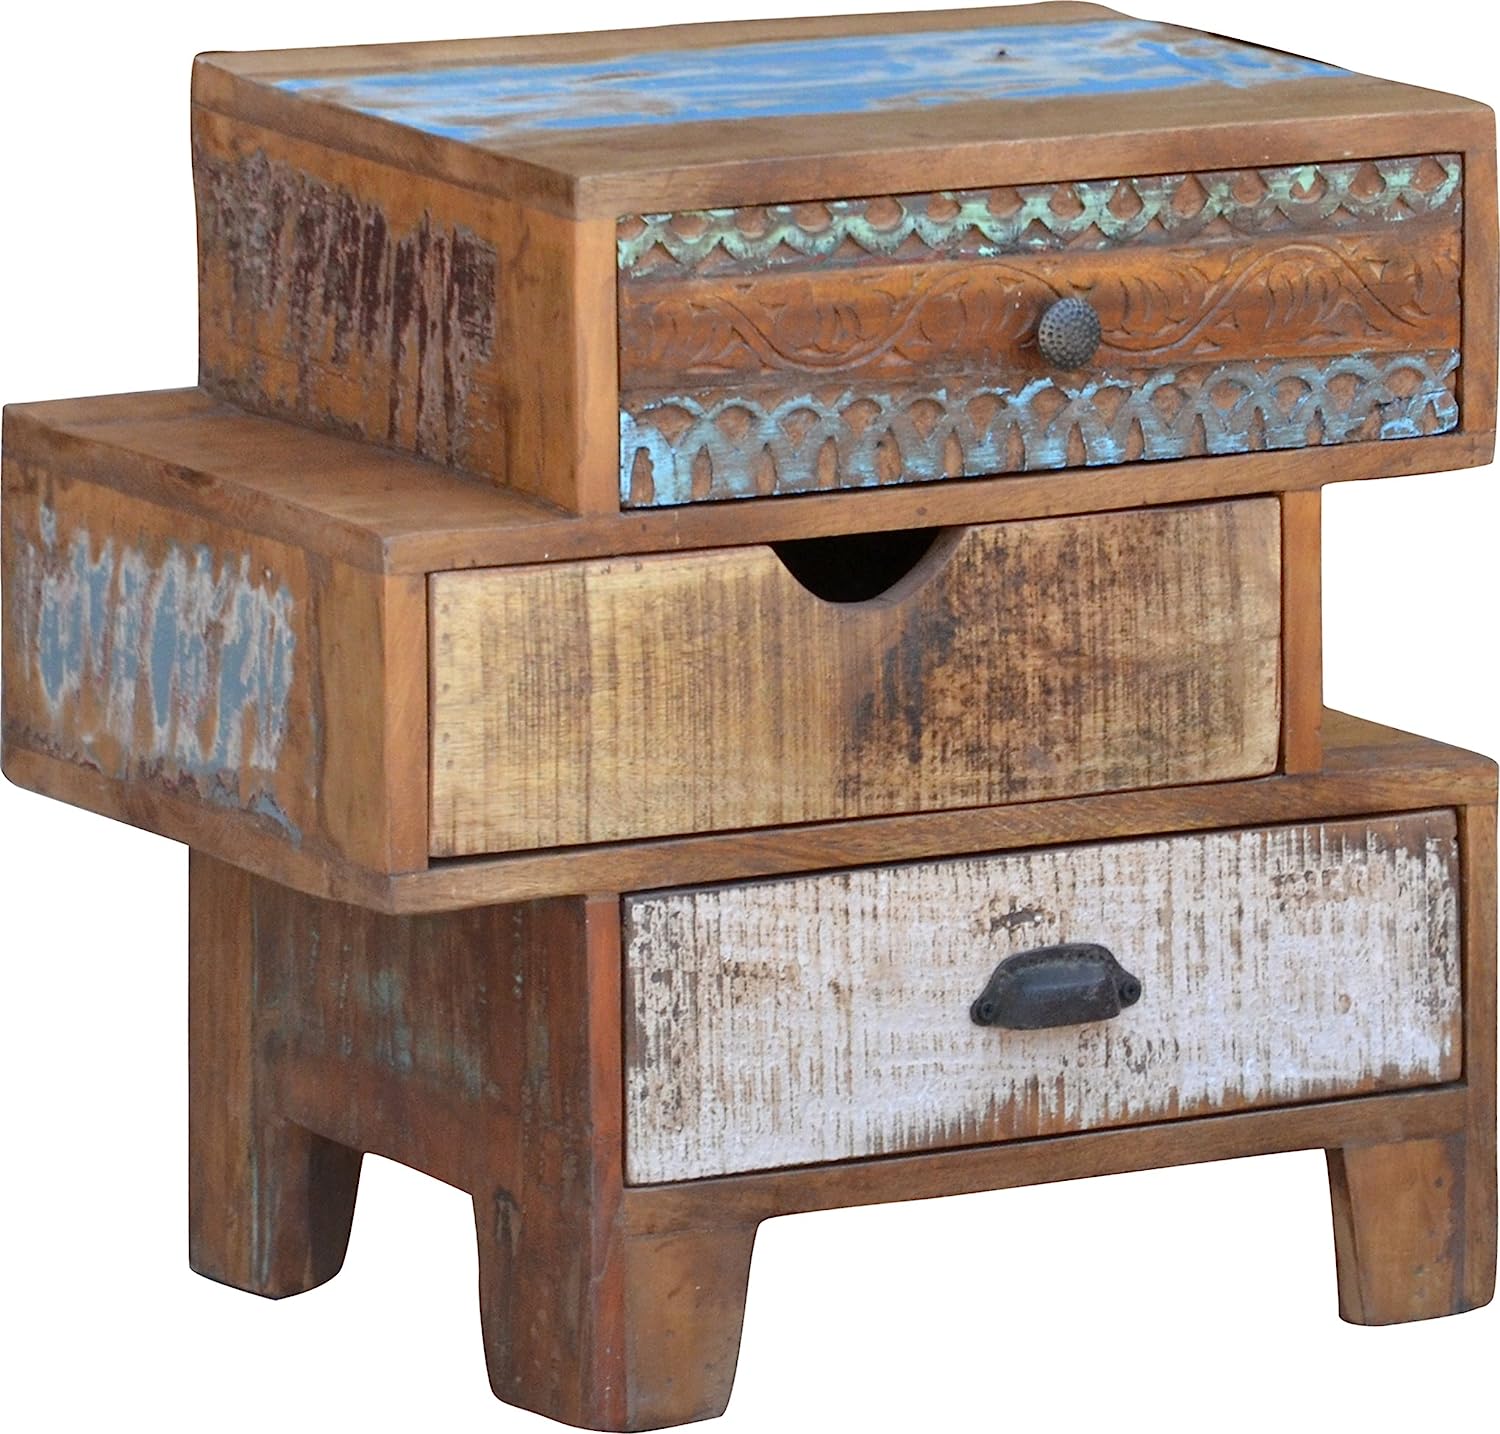 GURU SHOP Model 9 Drawer Cabinet with 3 Drawers in Vintage Design 53 x 54 x 33 cm Brown